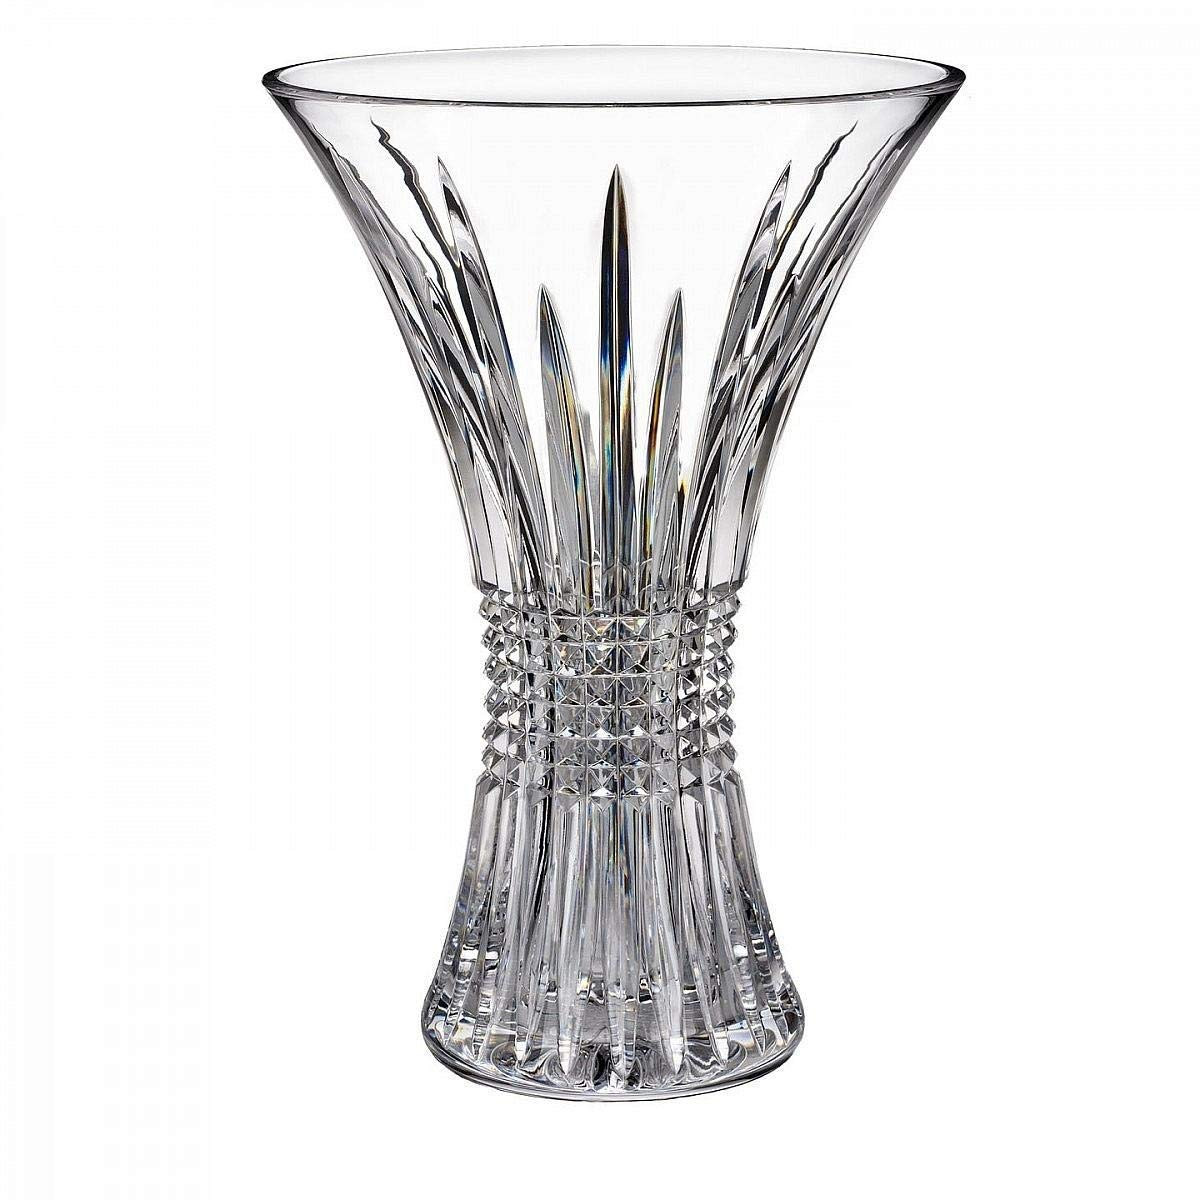 20 attractive Mikasa Florale Crystal Vase 2022 free download mikasa florale crystal vase of amazon com waterford lismore diamond 14 vase home kitchen with regard to 71lgeqbvjql sl1200